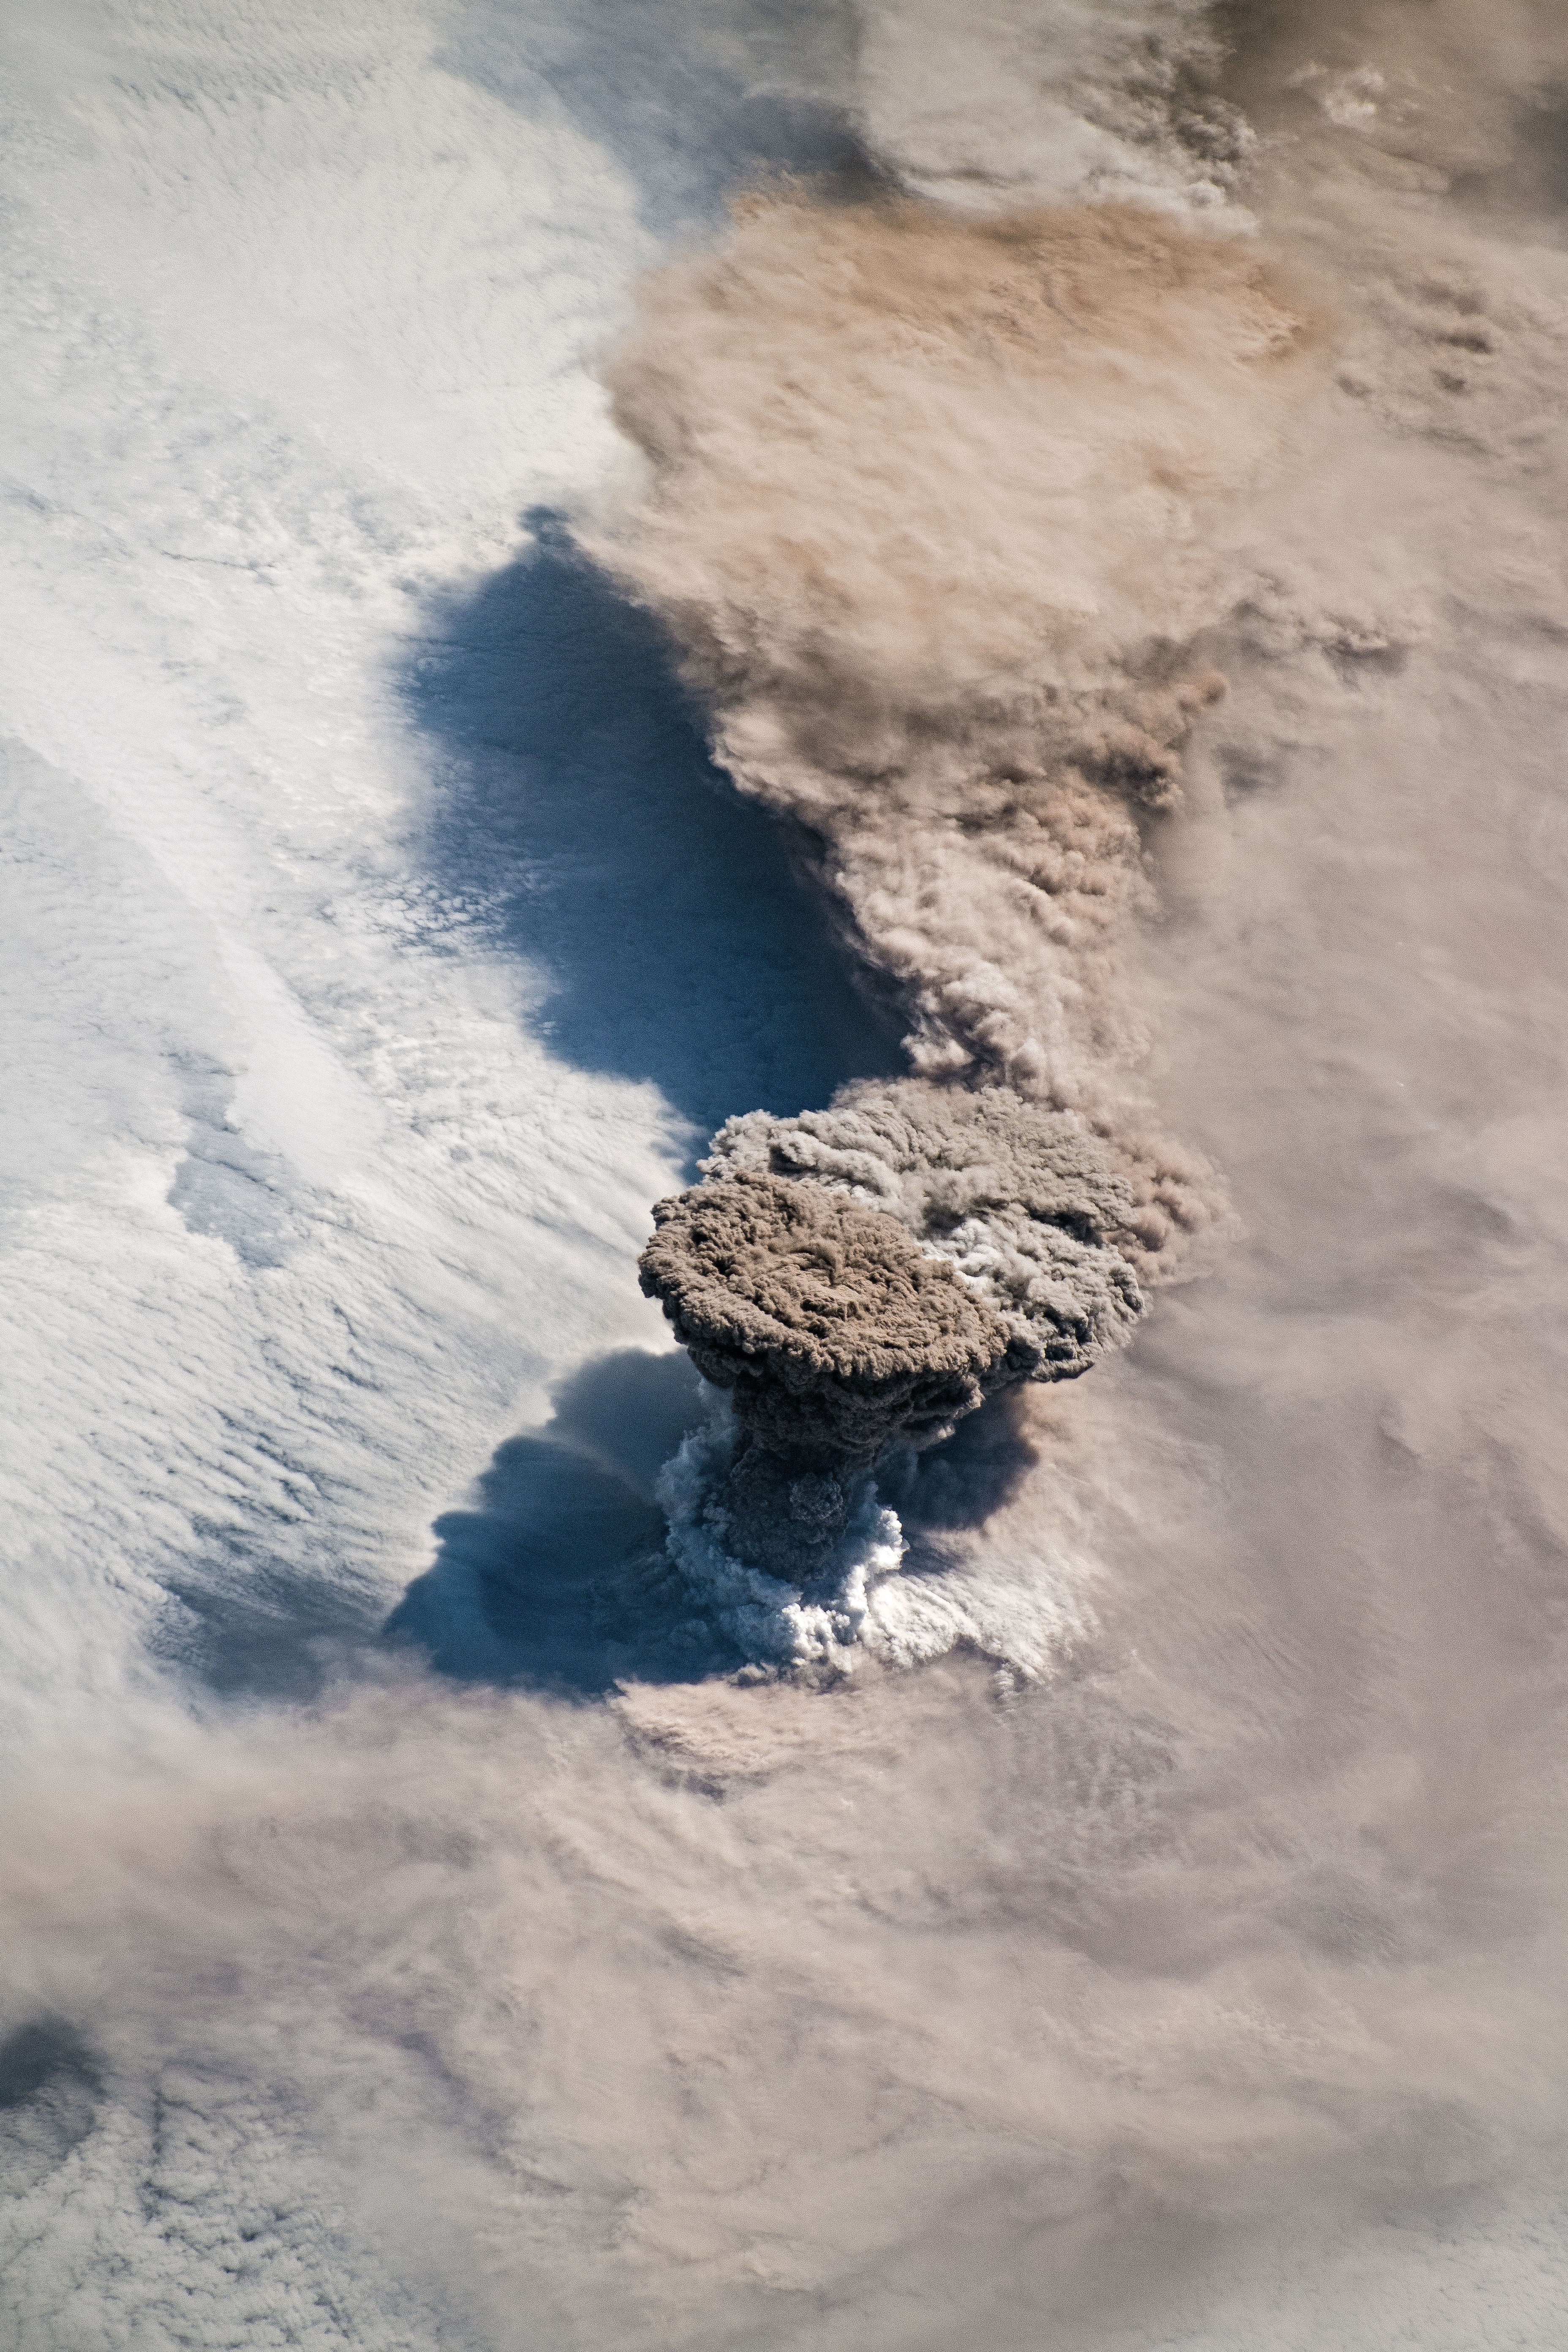 Raikoke Eruption - Image Credit: NASA